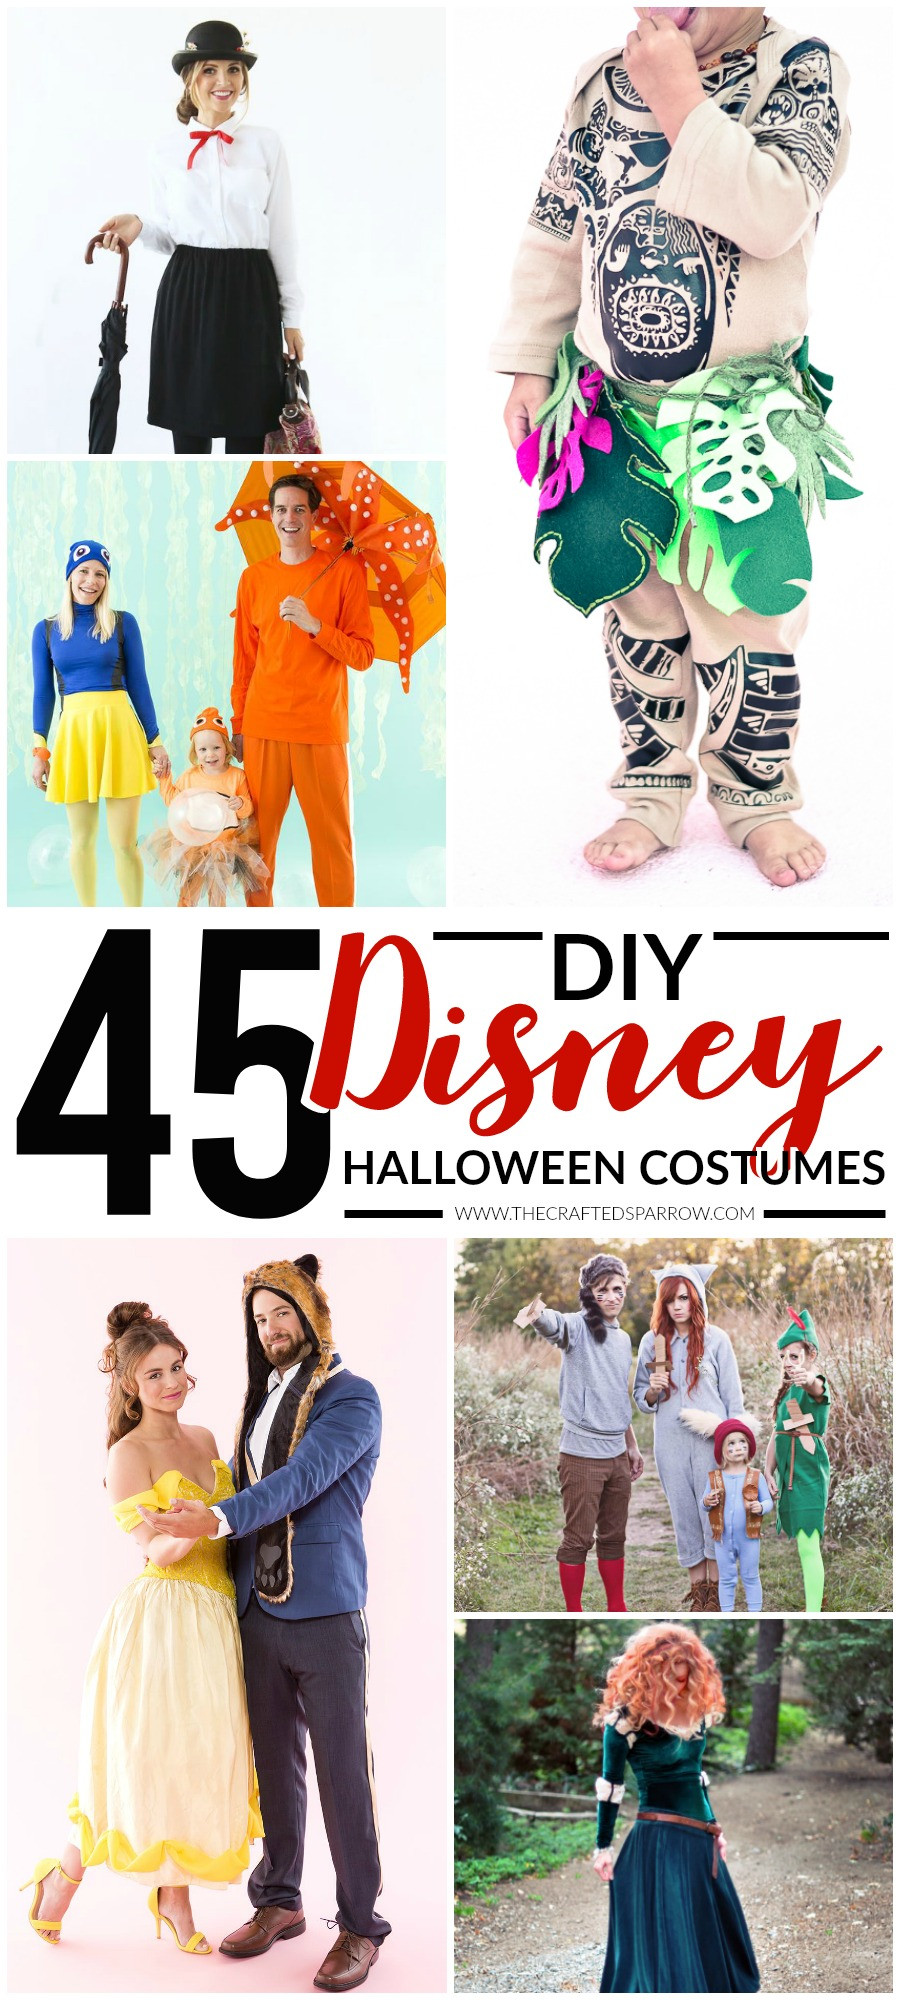 DIY Disney Costume
 45 DIY Disney Themed Halloween Costumes